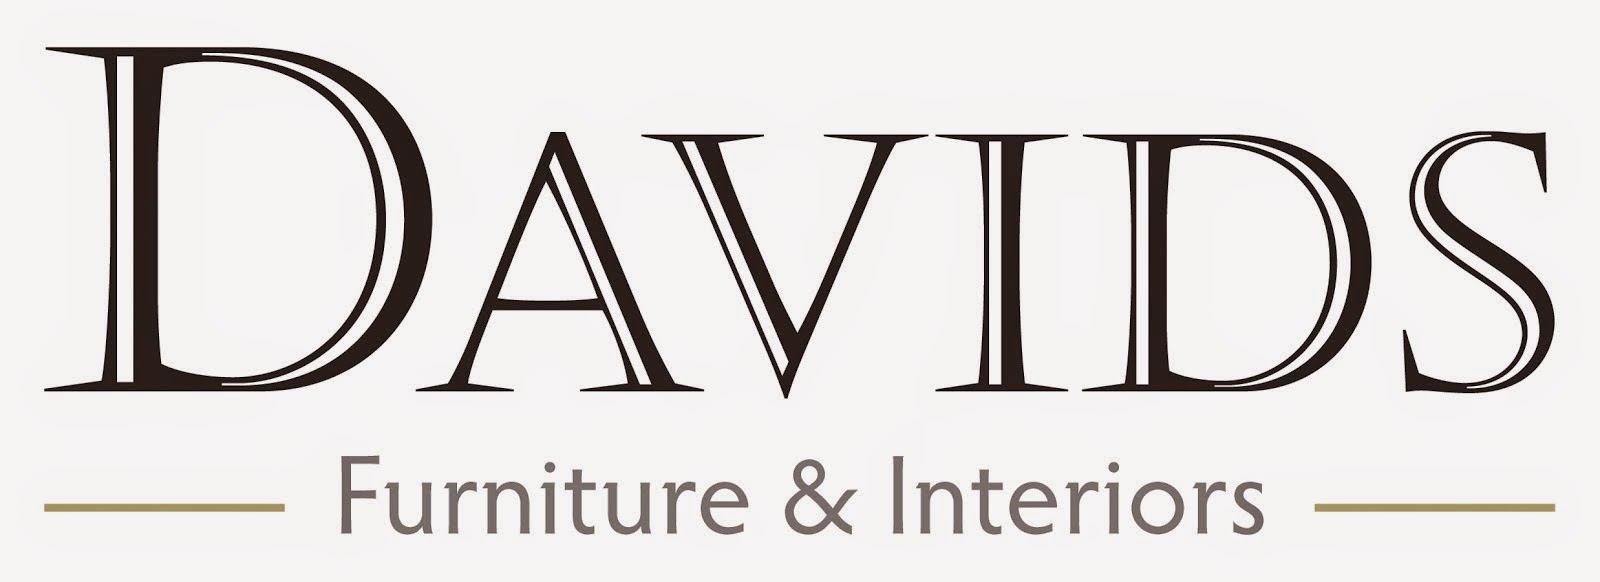 Davids logo